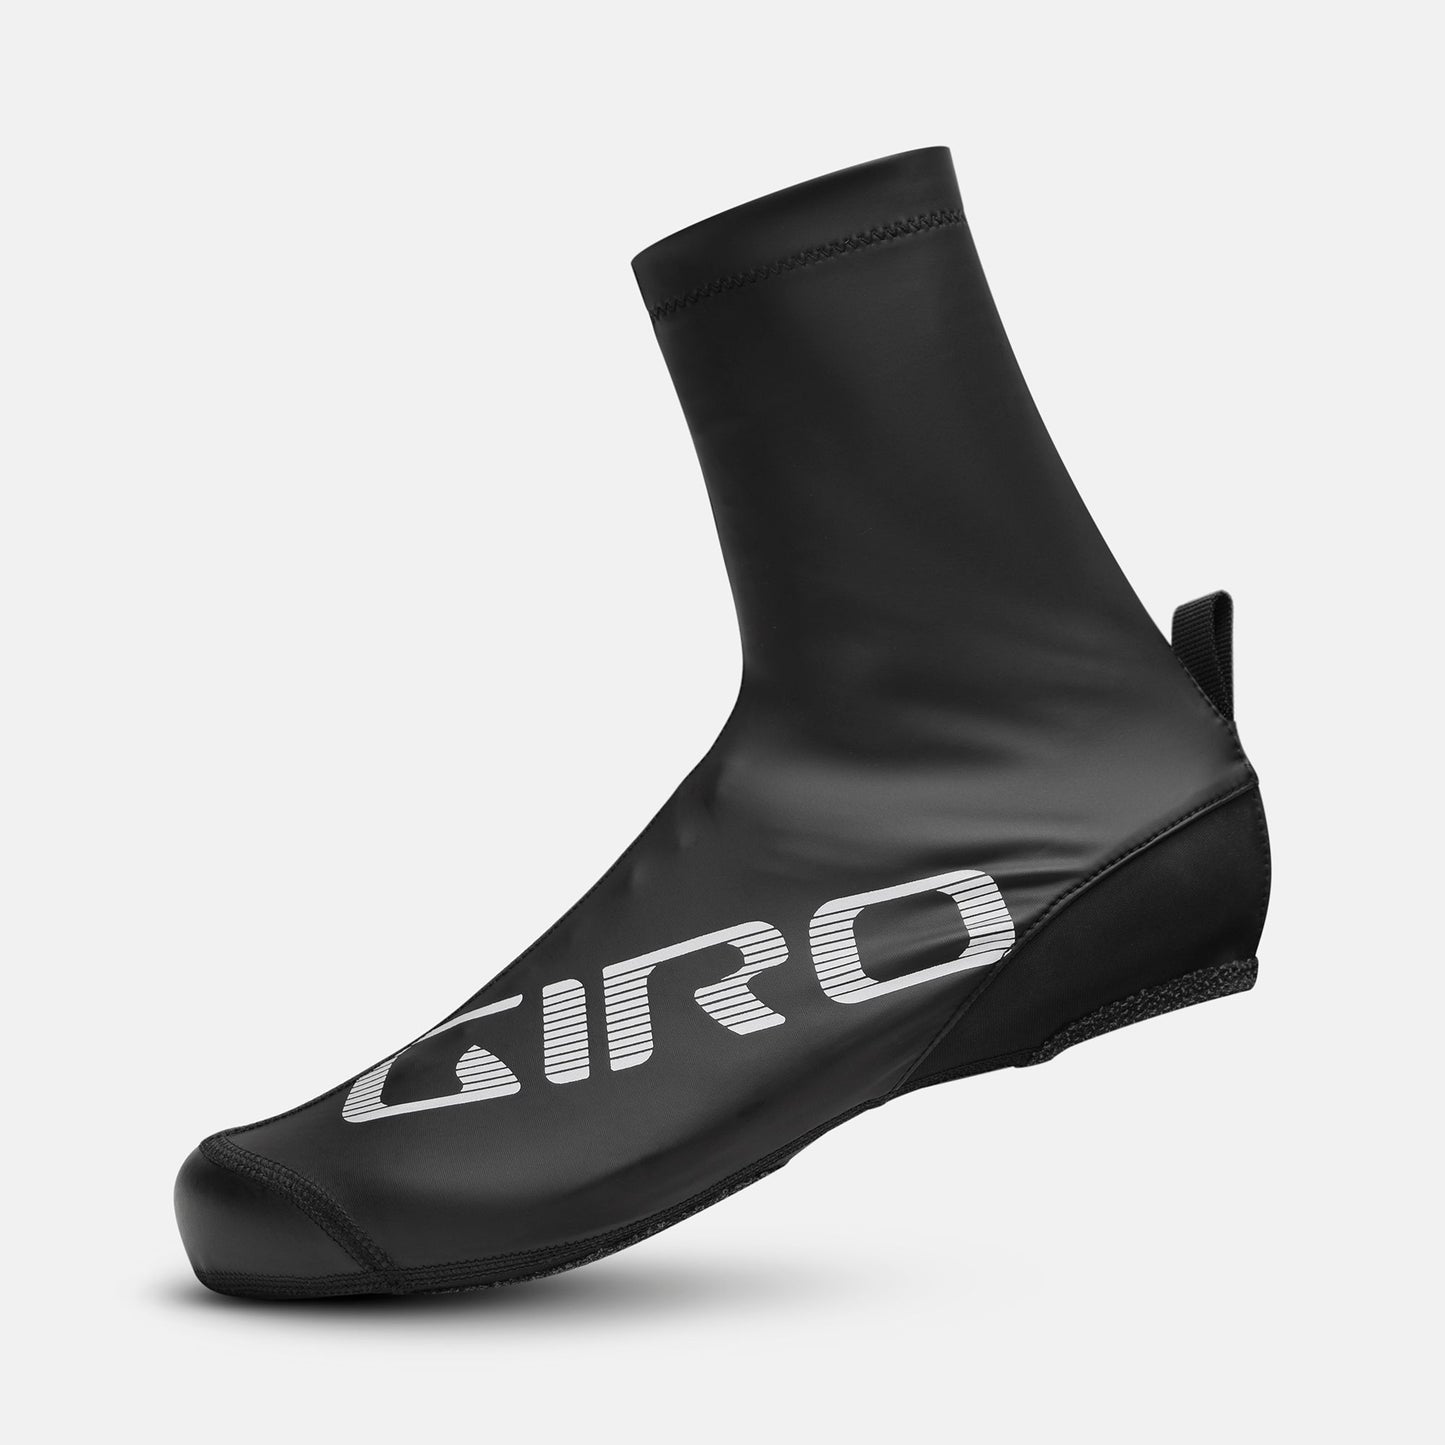 Giro Proof 2.0 Winter Shoe Cover - Black - Size M